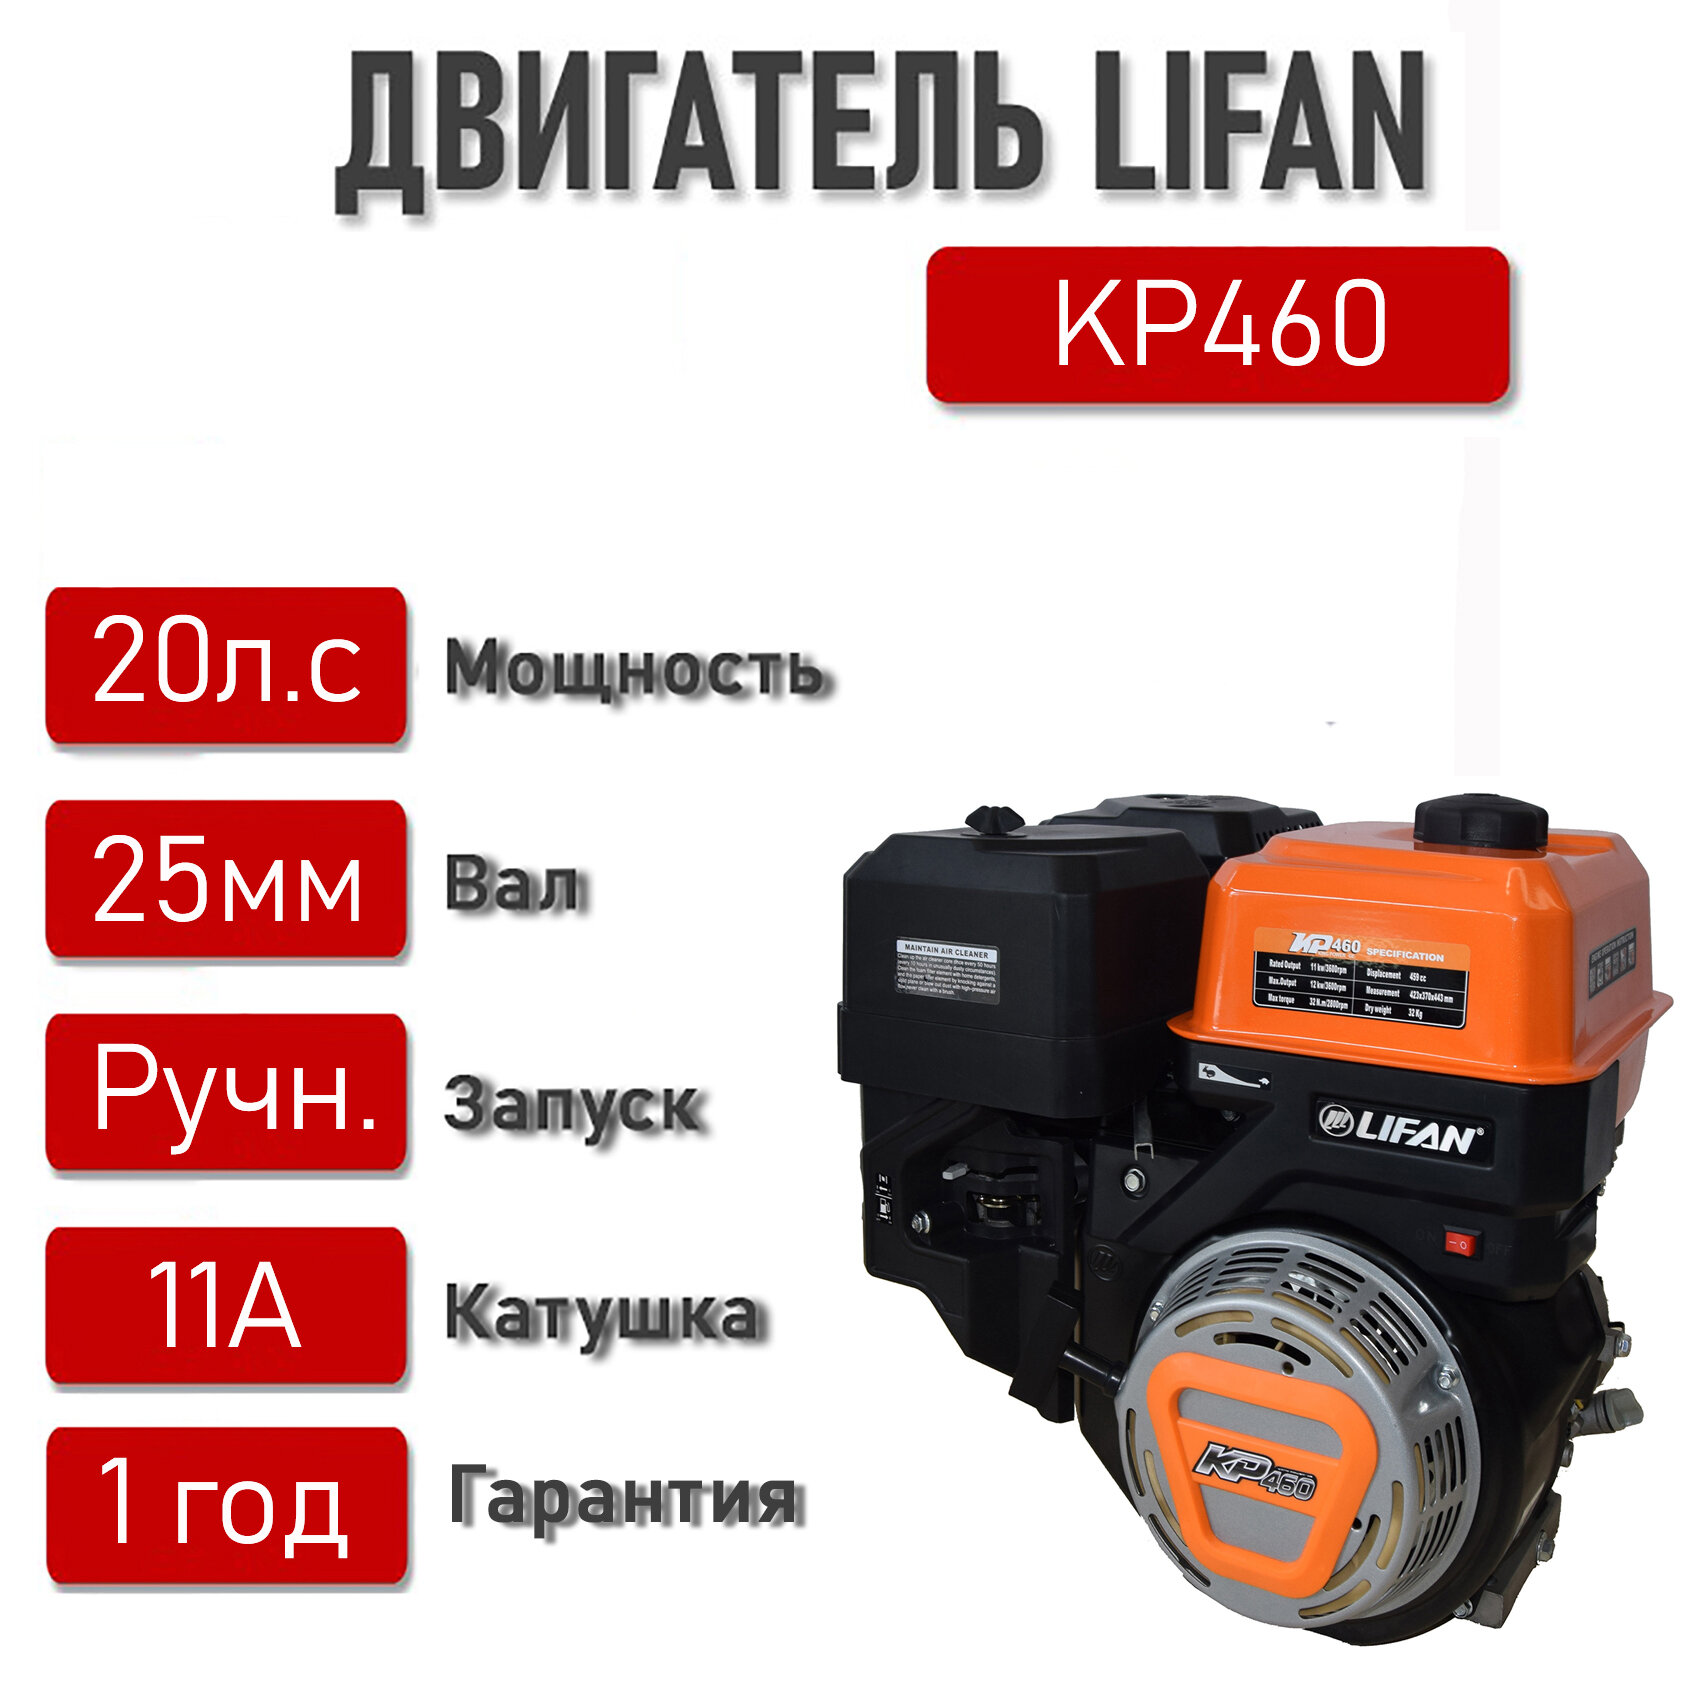 Двигатель LIFAN 20 л. с. с катушкой 11А KP460 (4Т) вал 25 мм